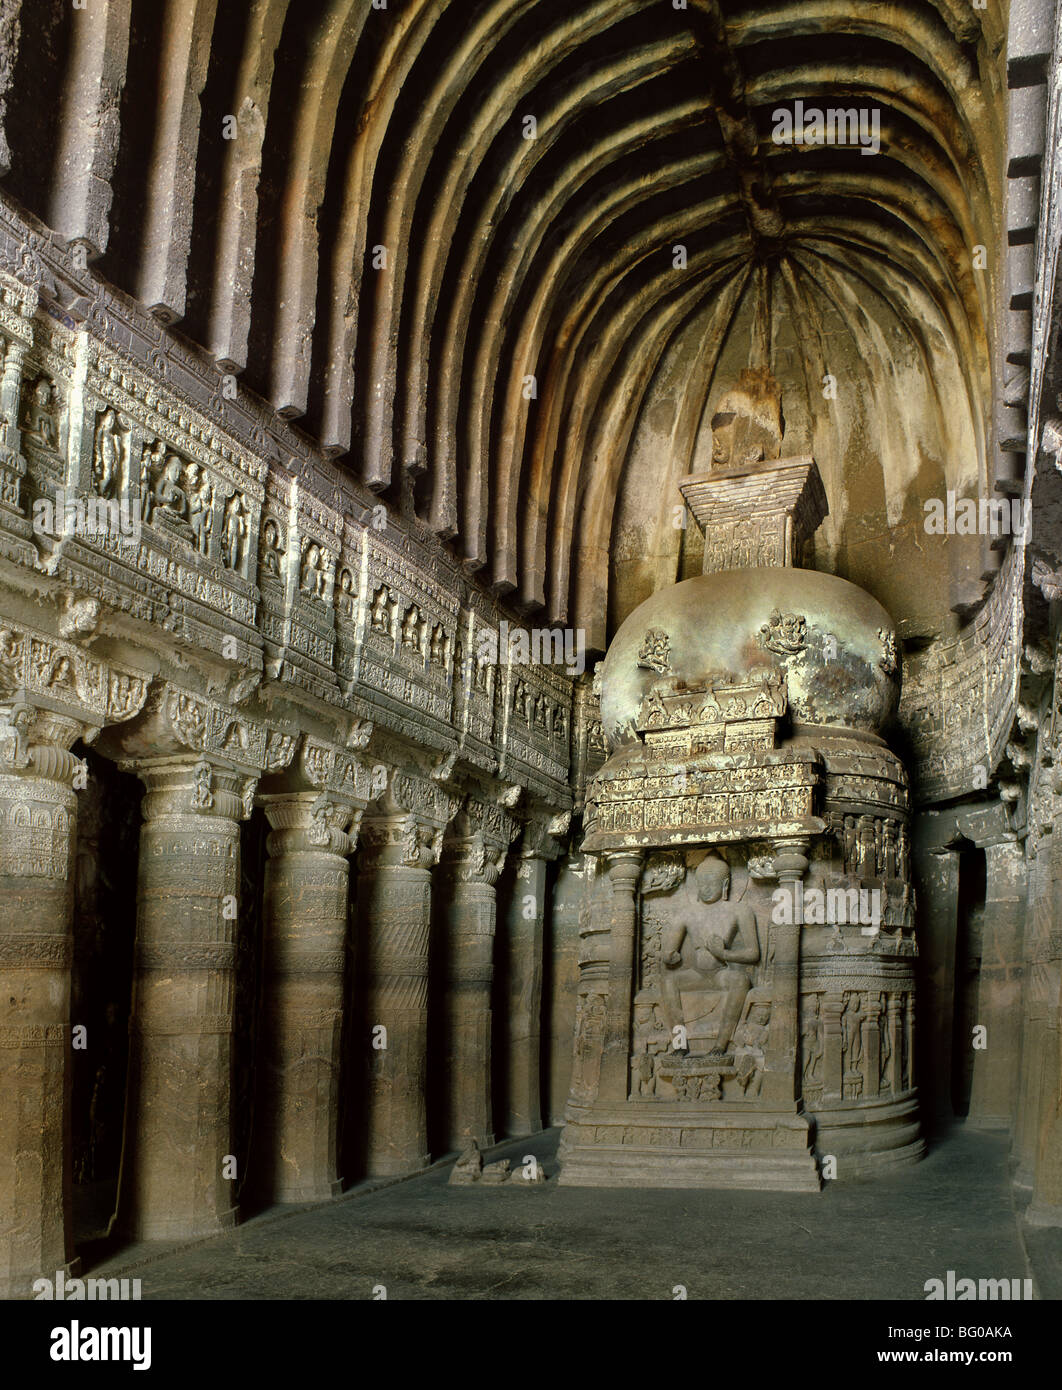 Grotta buddista 26, Ajanta, Sito Patrimonio Mondiale dell'UNESCO, Maharashtra, India, Asia Foto Stock